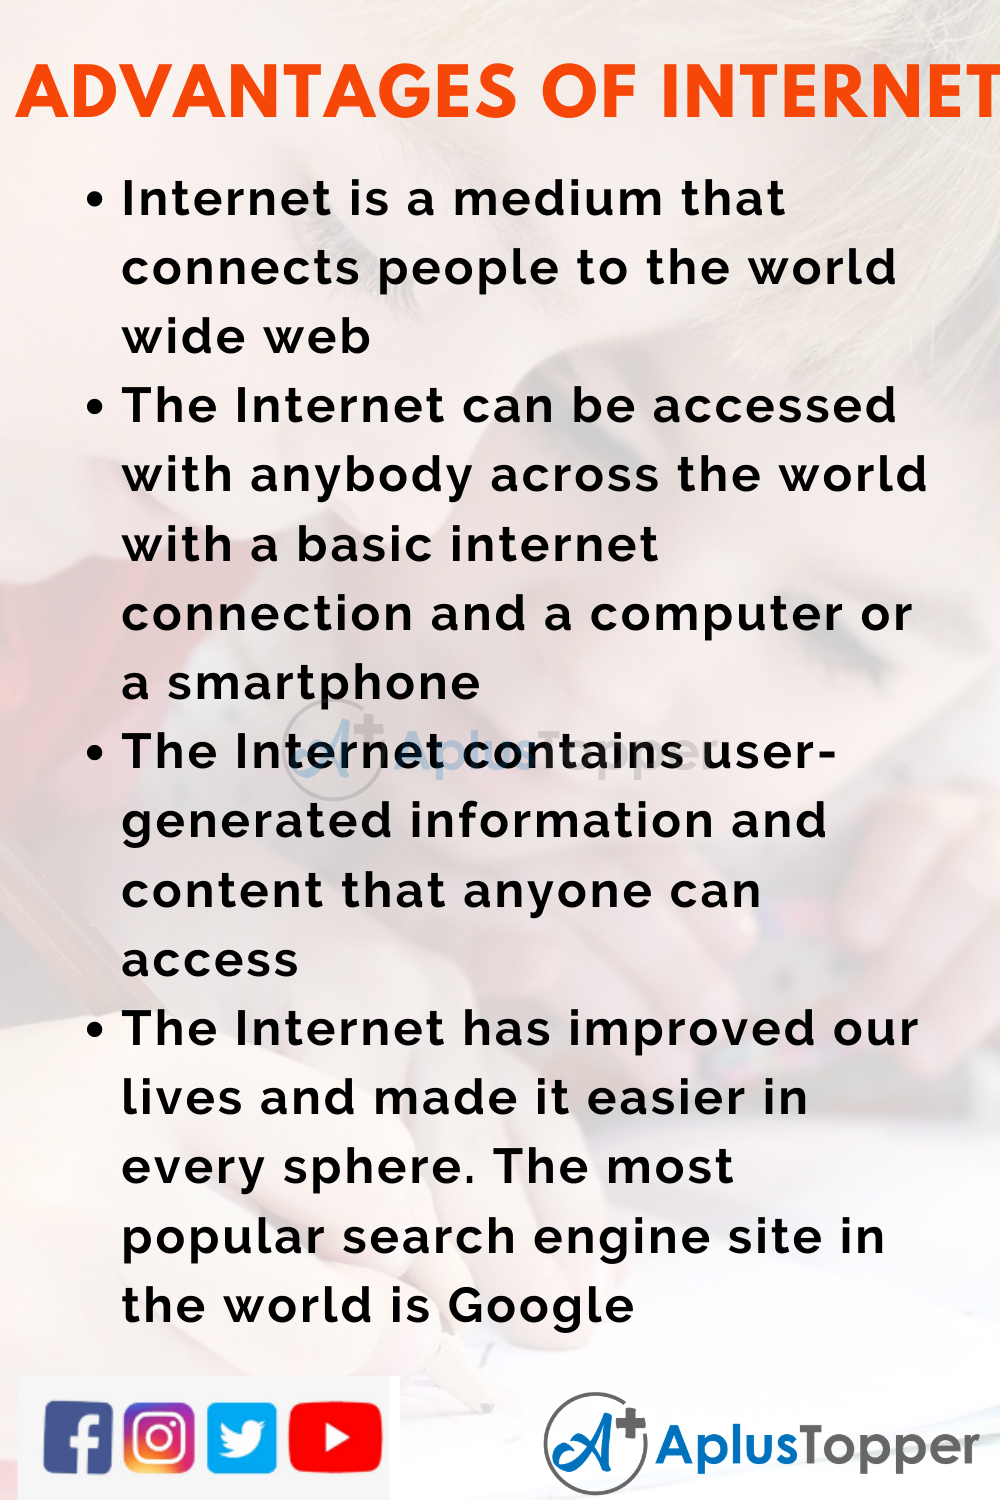 essay on benefits of internet